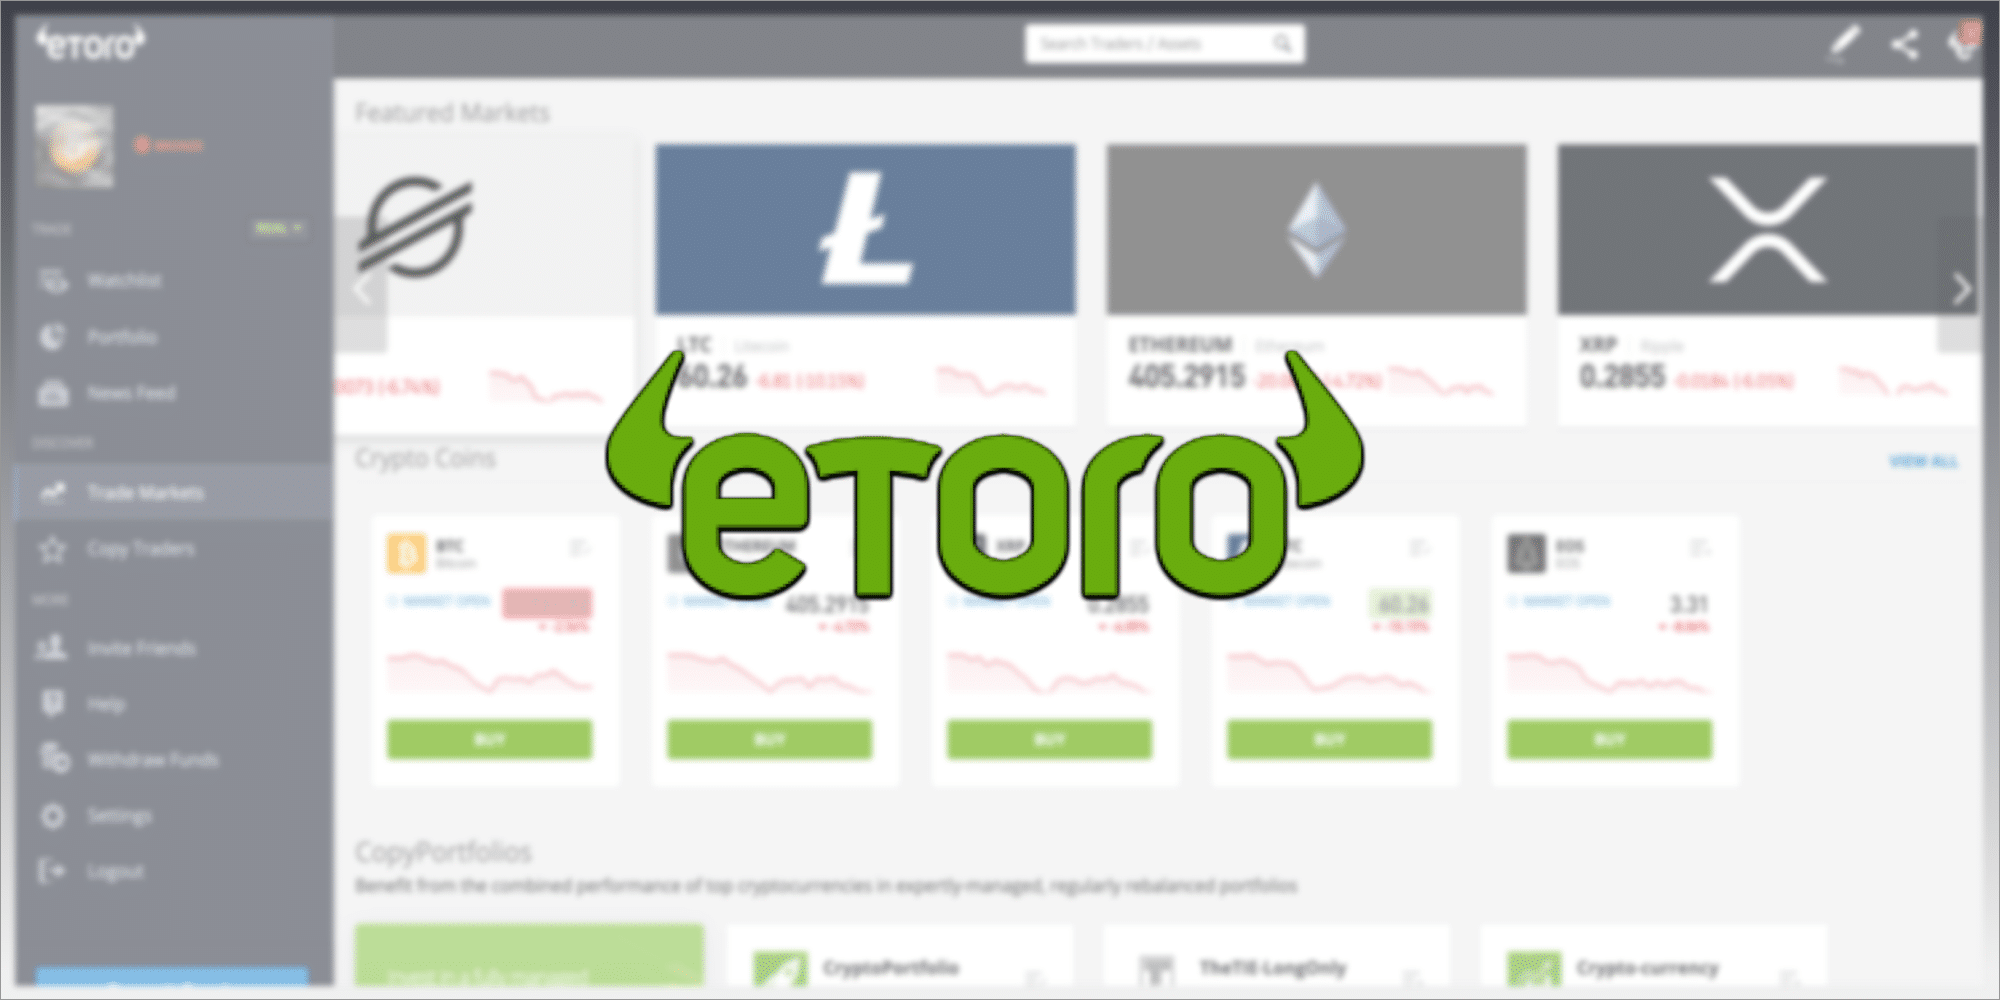 eToro Review 2020: Is eToro Legit, Safe, and Worth Your Time?